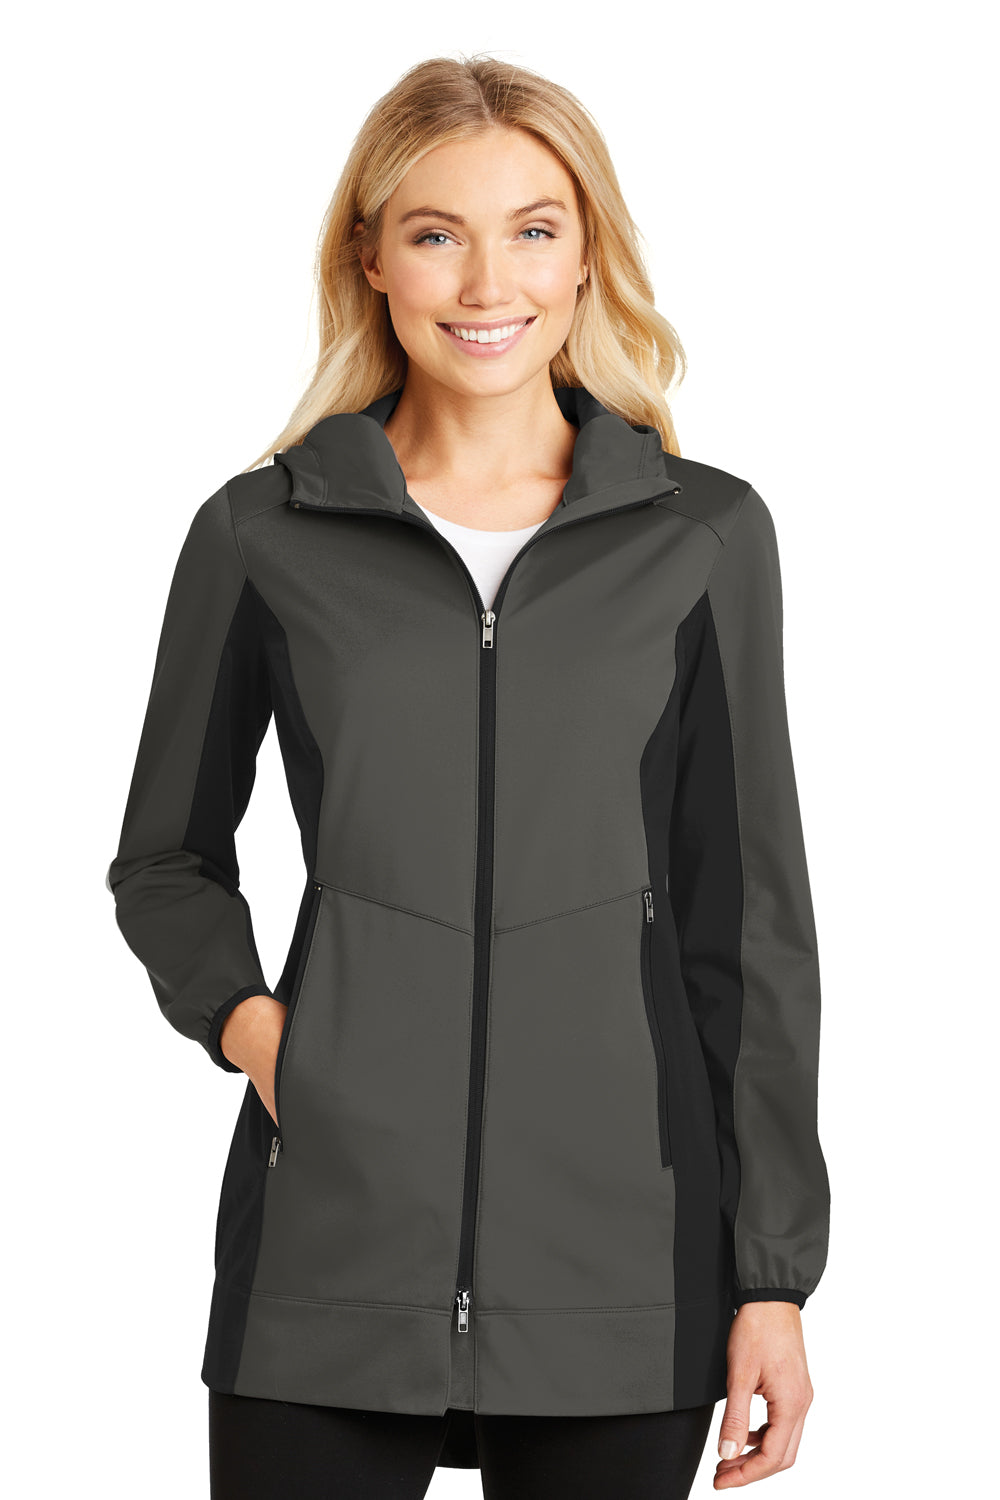 Port Authority L719 Womens Active Wind & Water Resistant Full Zip Hooded Jacket Grey Steel/Black Front